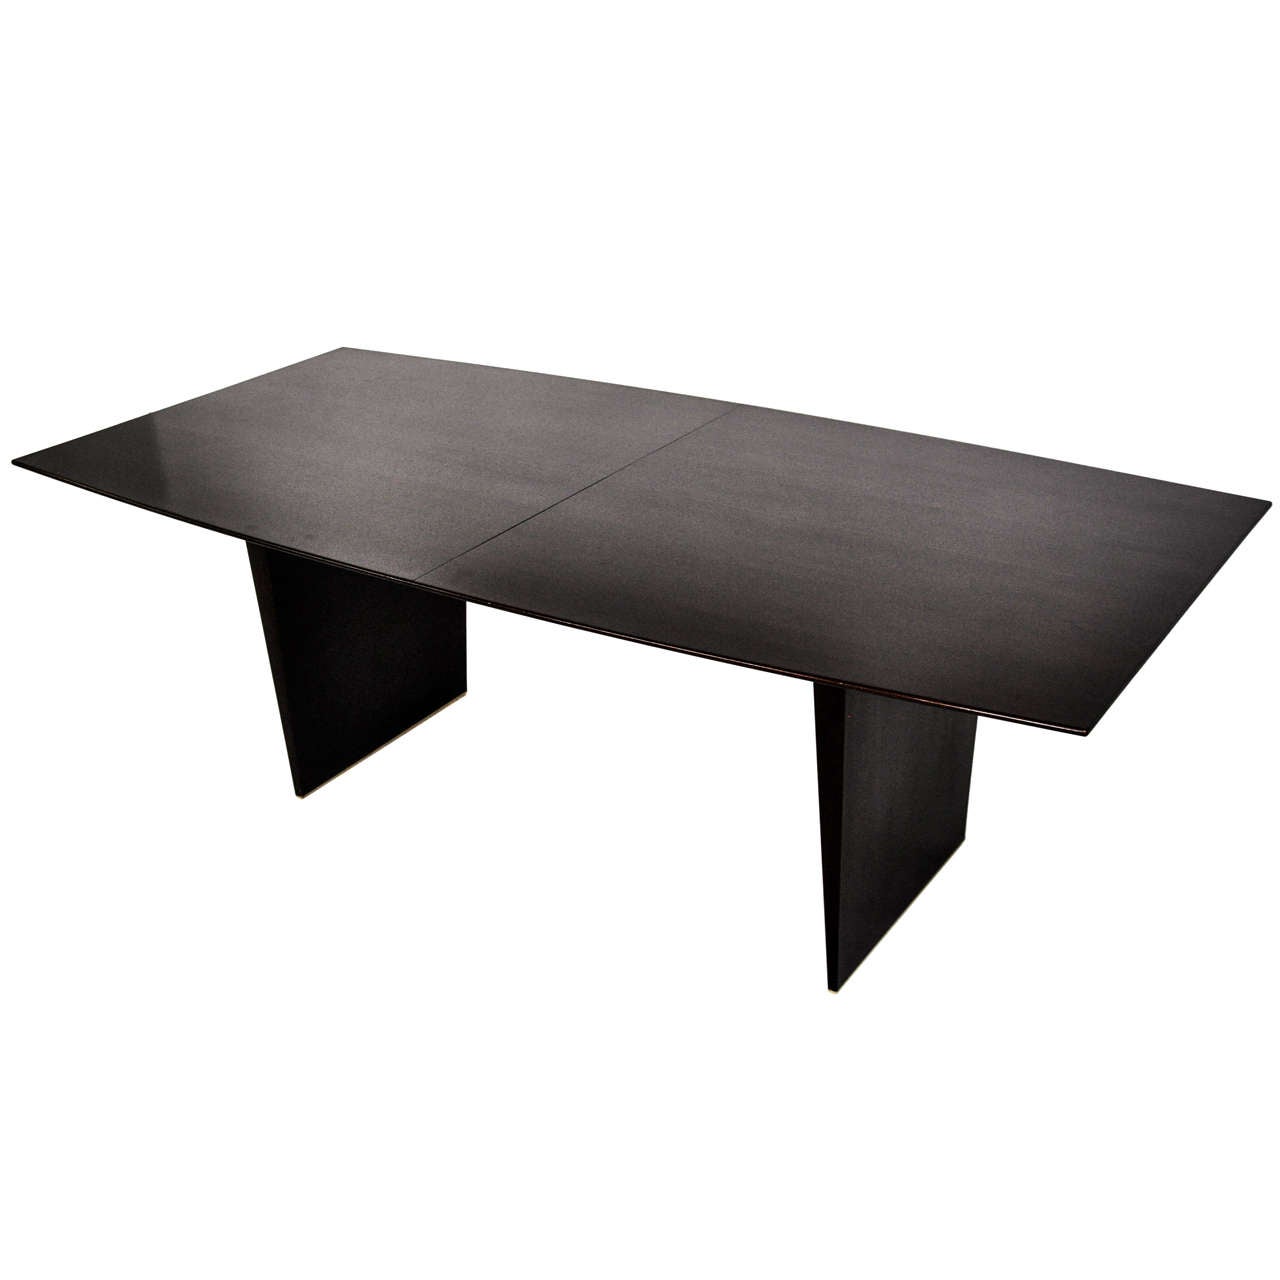 Dunbar dining table model 5460. Designed by Edward Wormley. Original custom ordered finish. Three 12